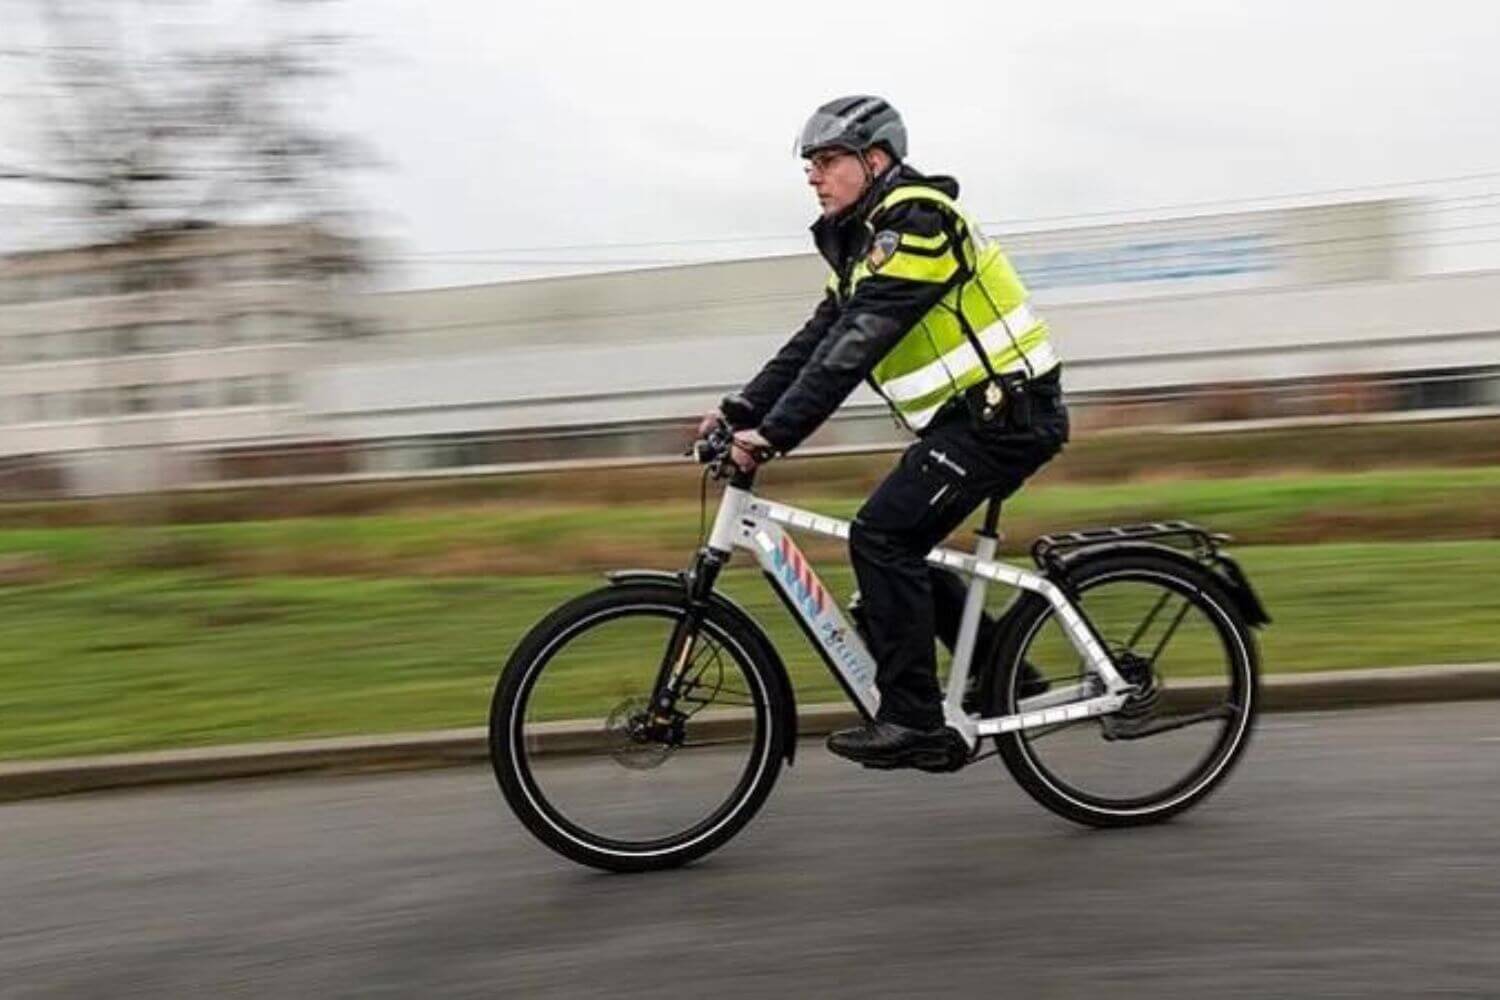 Police Electric Bikes